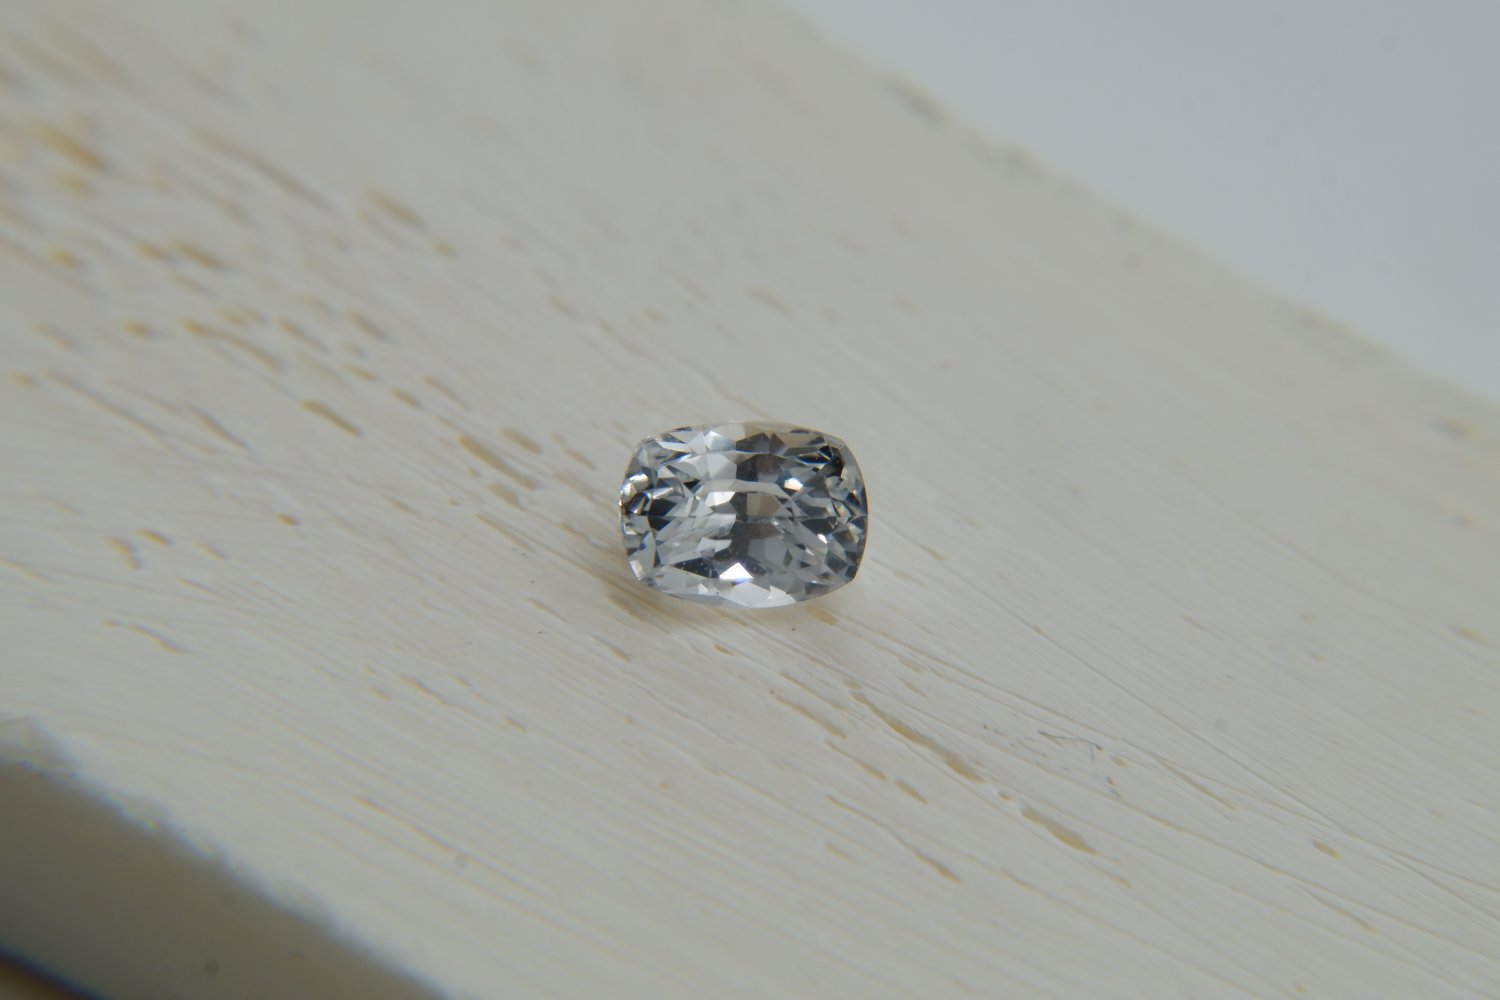  PREMIUM: Vivid Crisp White Sapphire, diamond like premium handcrafted designer cut, brilliance rect